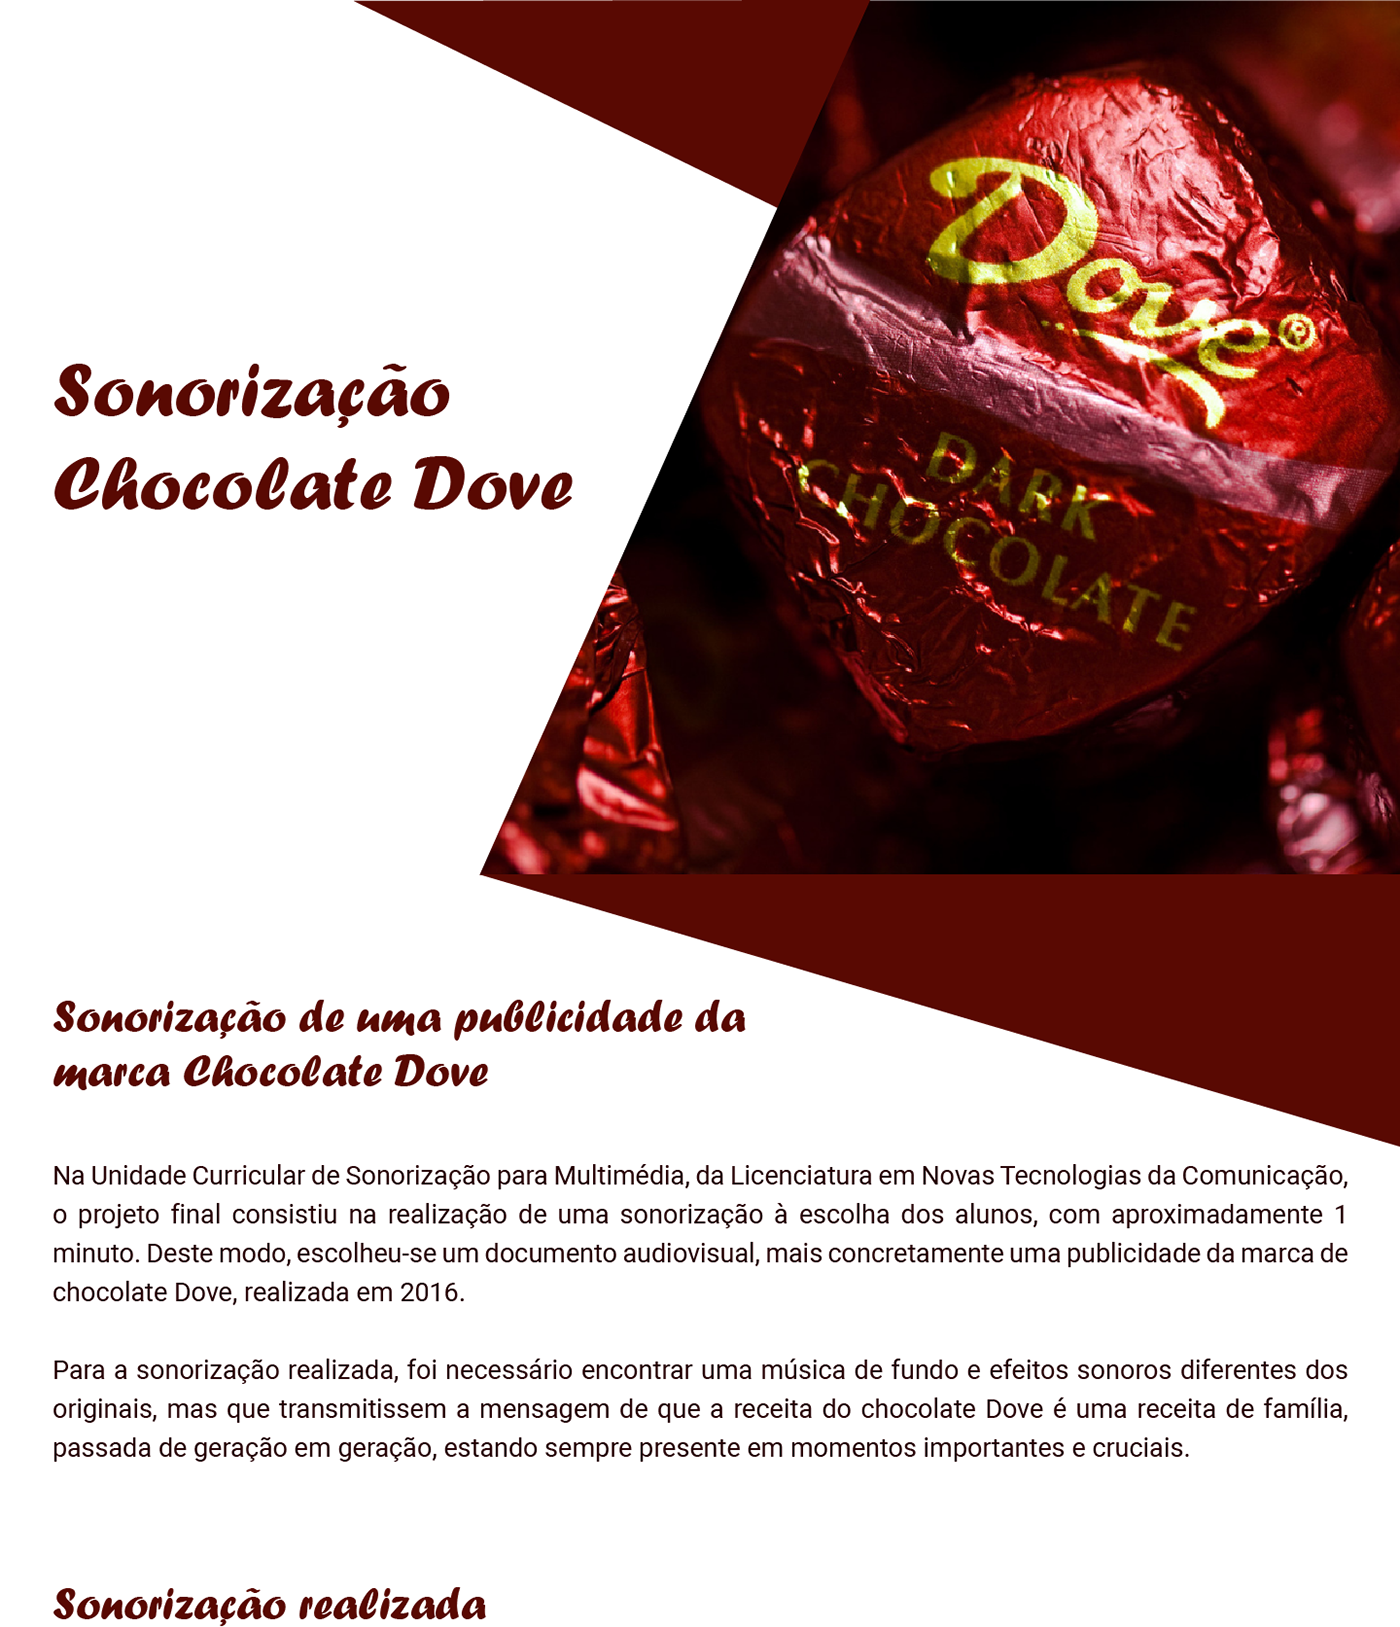 Audio chocolate dove publicity sound